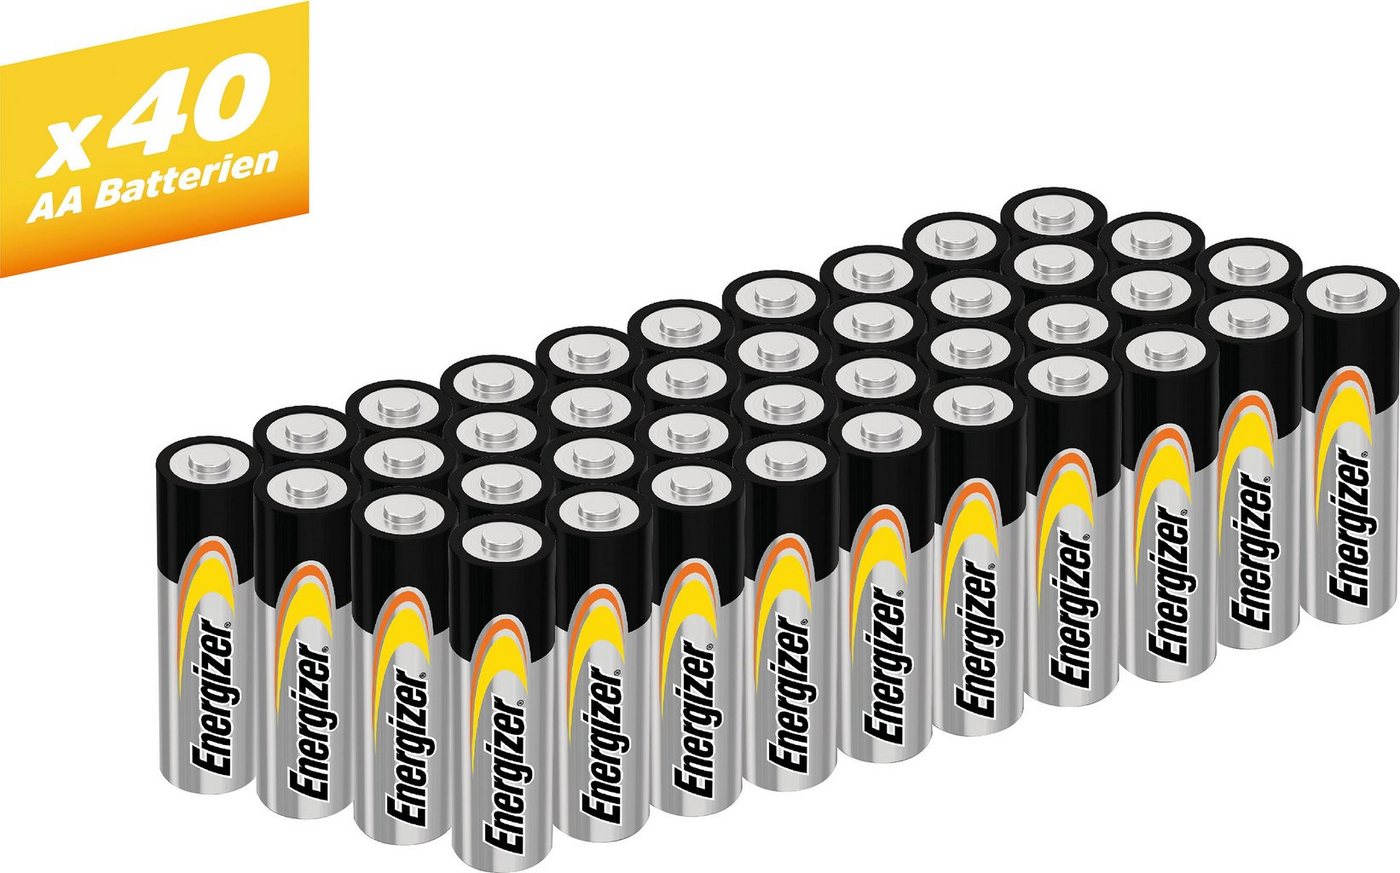 Energizer 40er Pack Alkaline Power Mignon (AA) Batterie, LR06 (1,5 V, 40 St) von Energizer